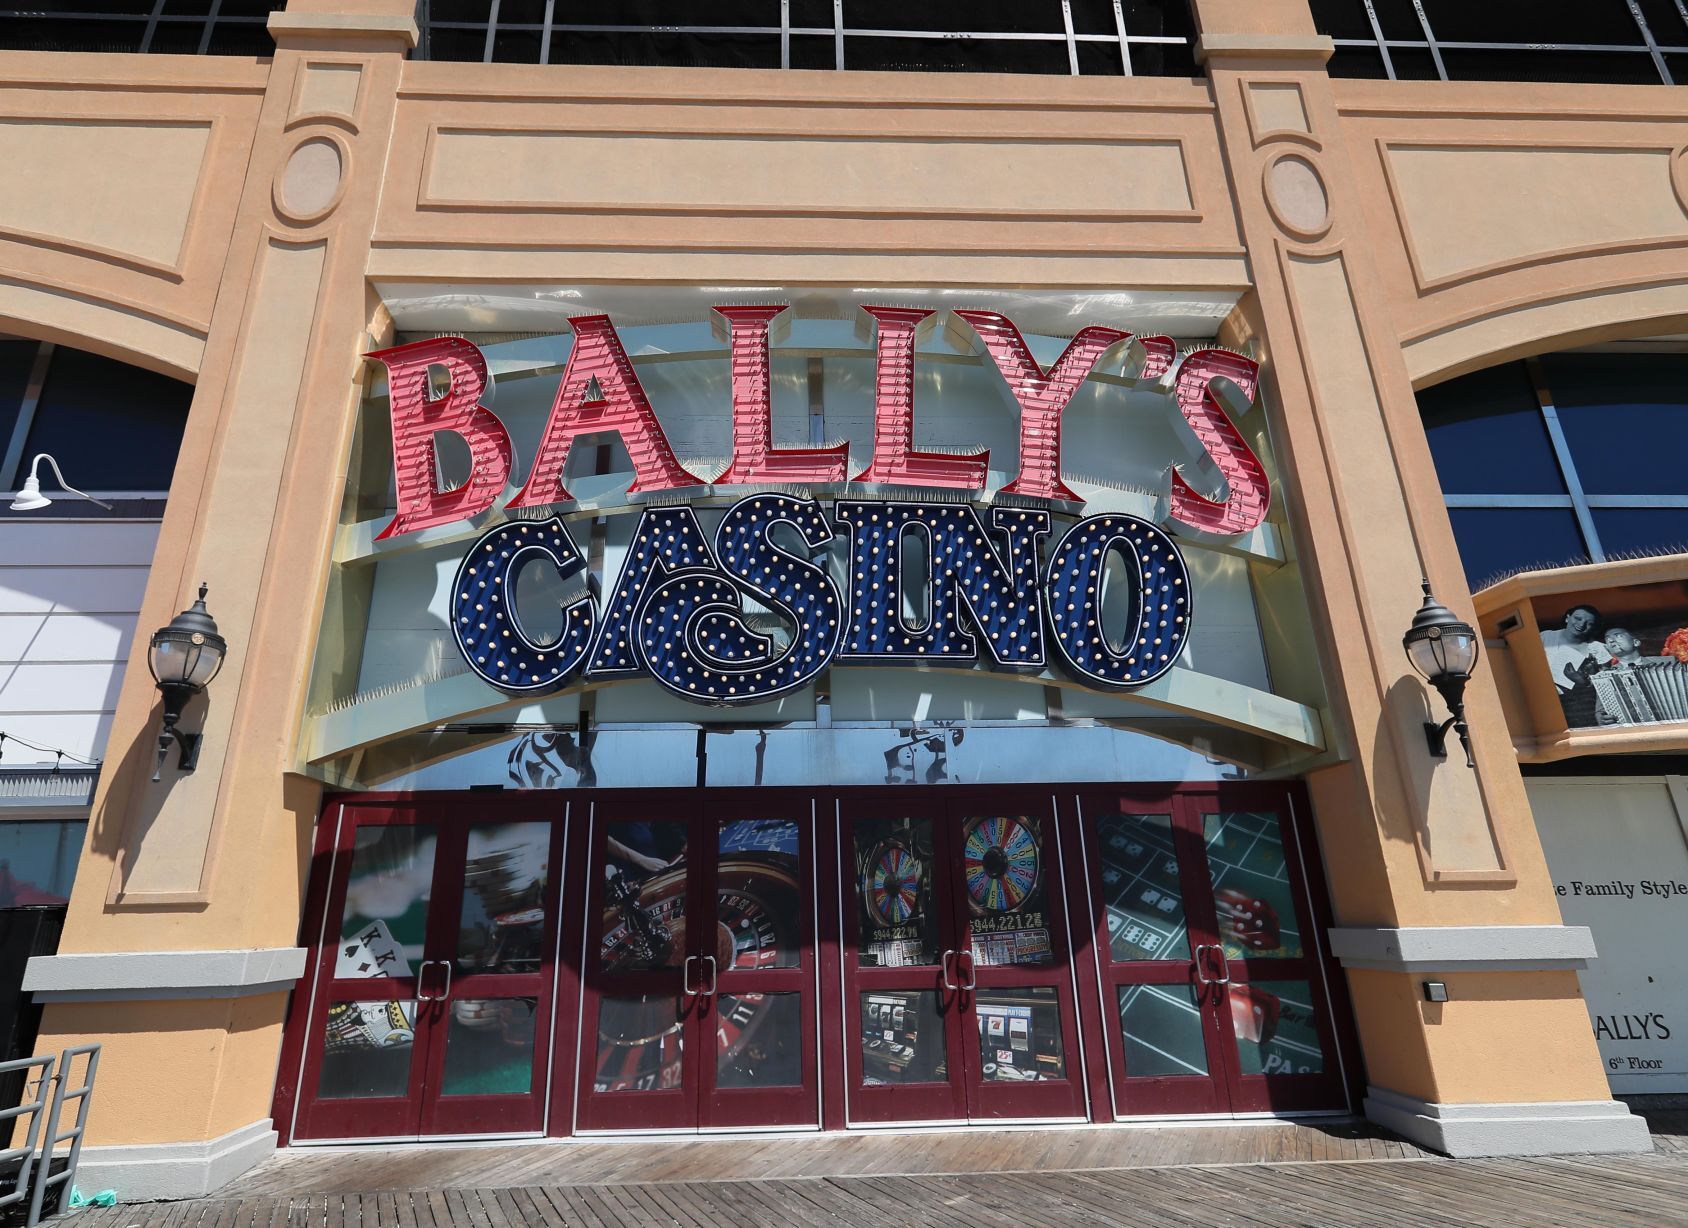 atlantic city online casinos bally 39